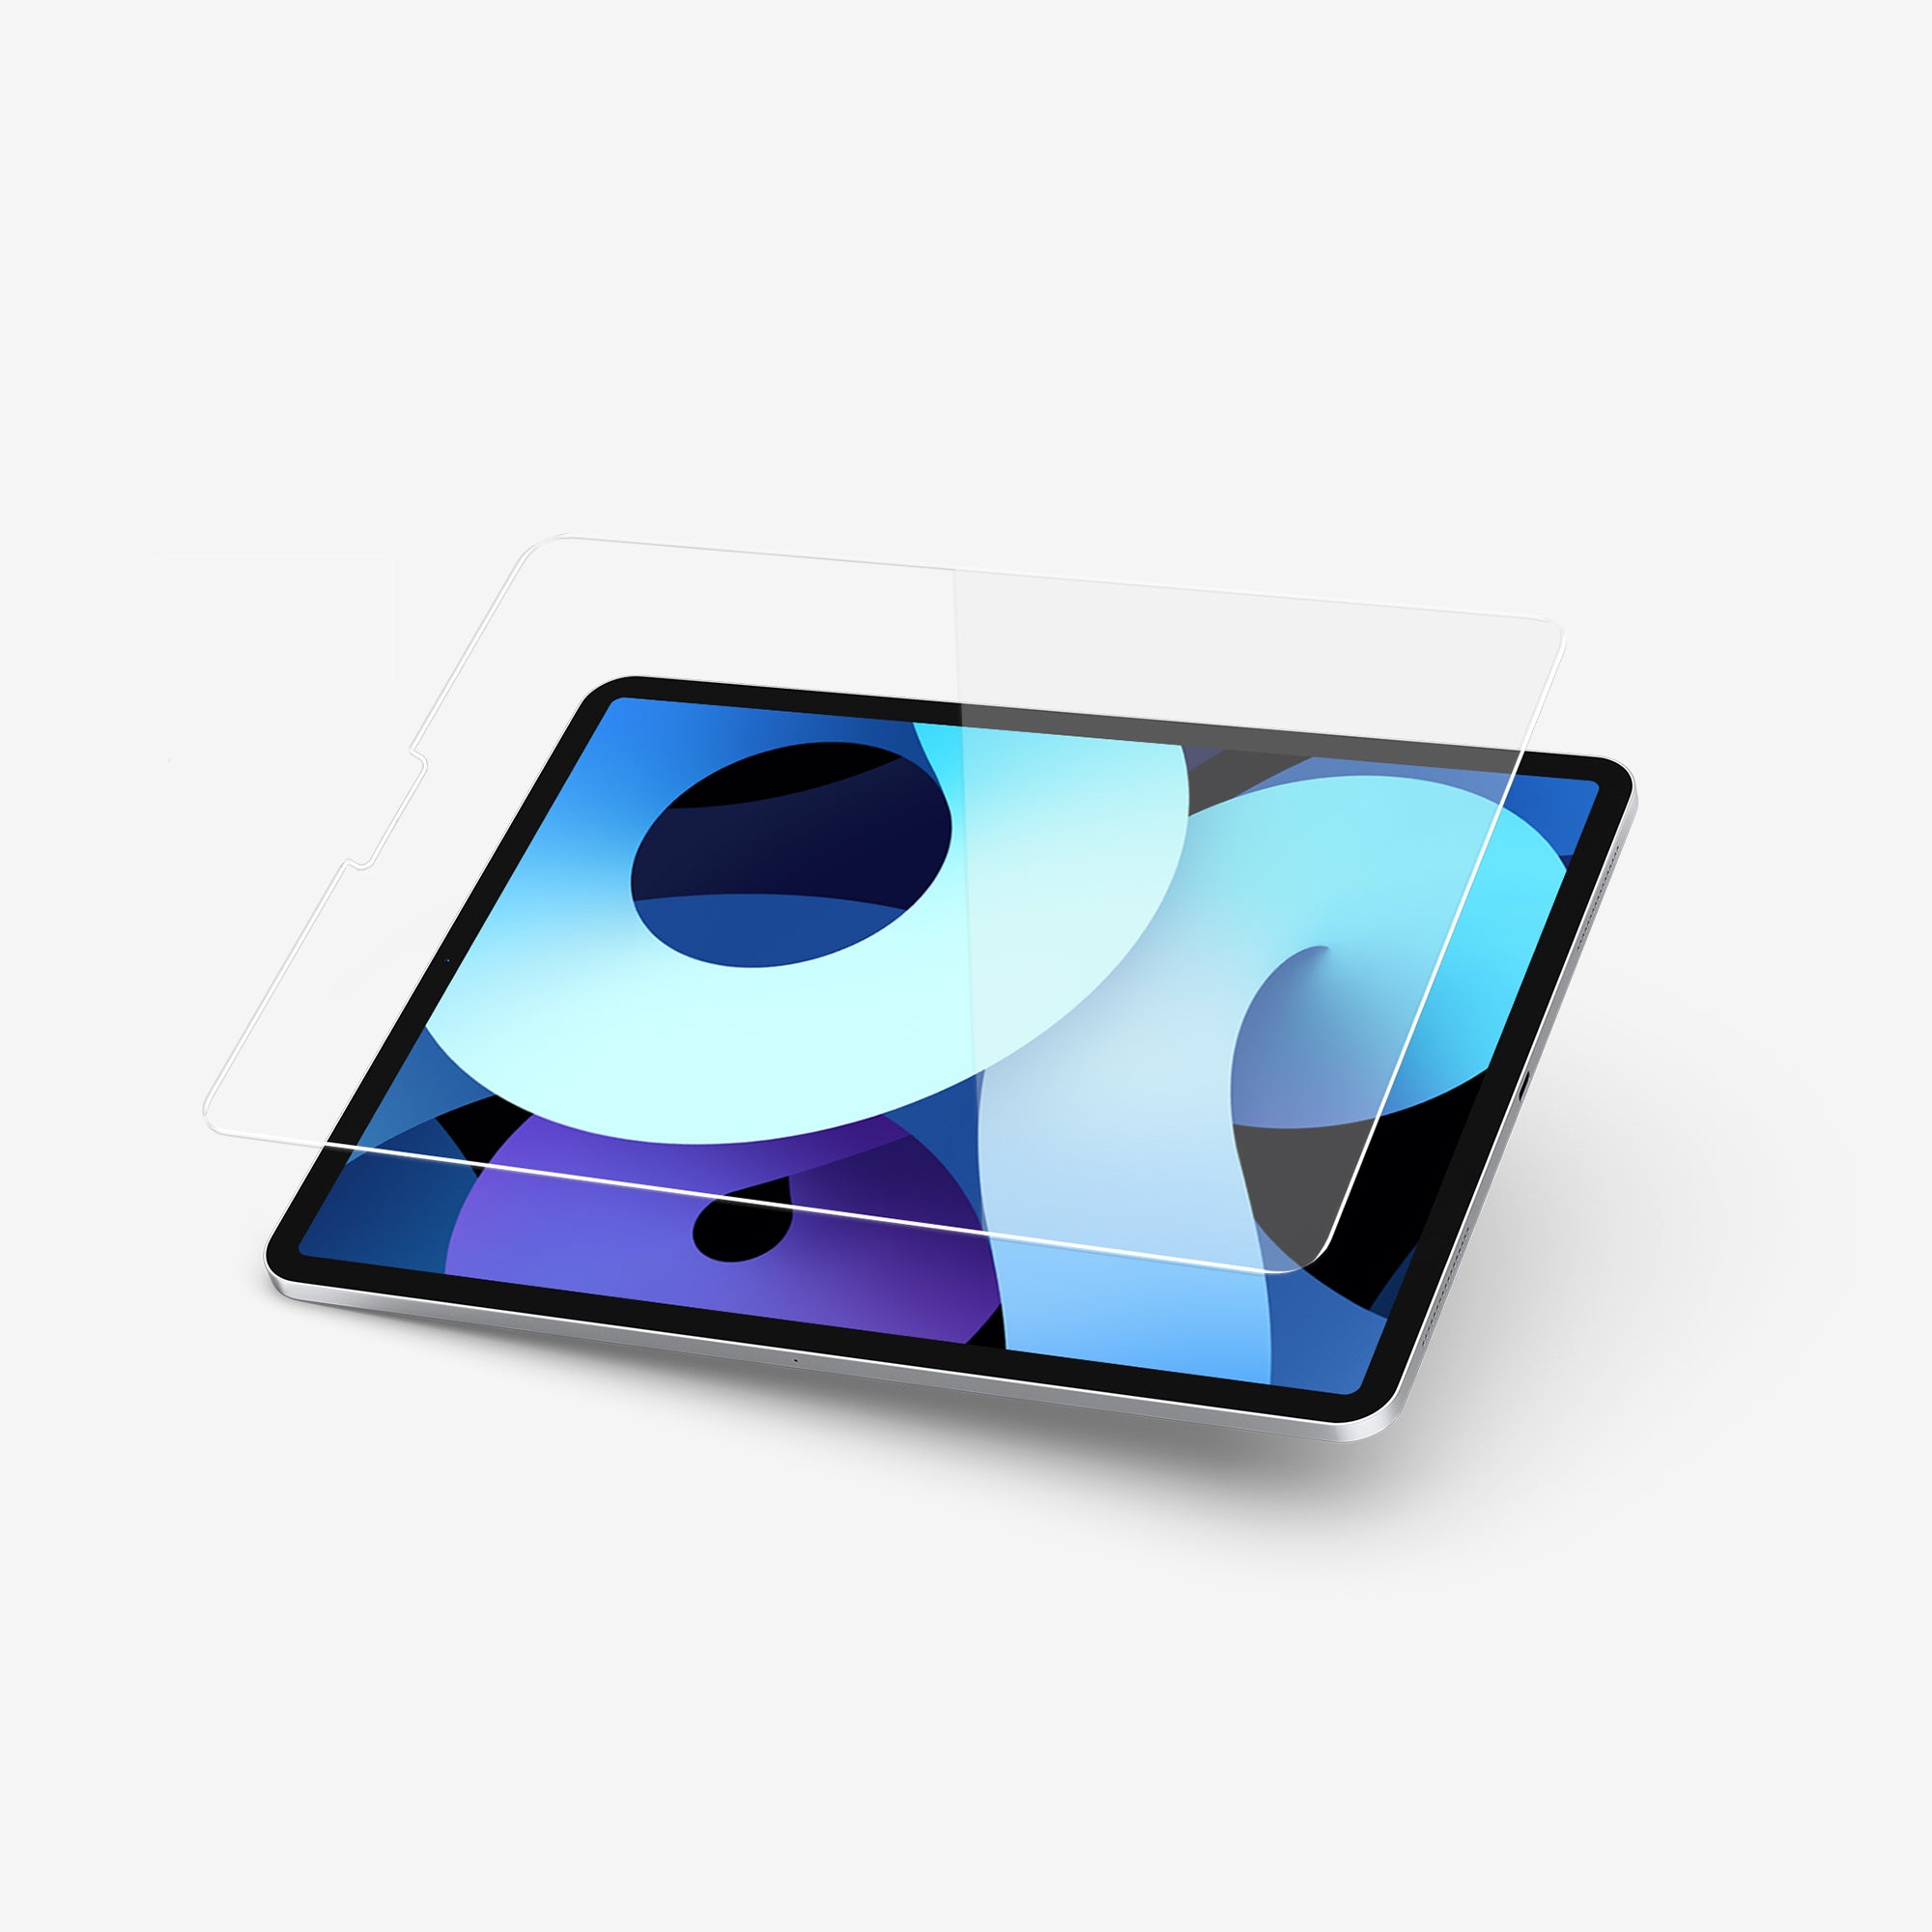 NanoArmour 10.9-inch iPad Air 4 Screen Protector (2020)